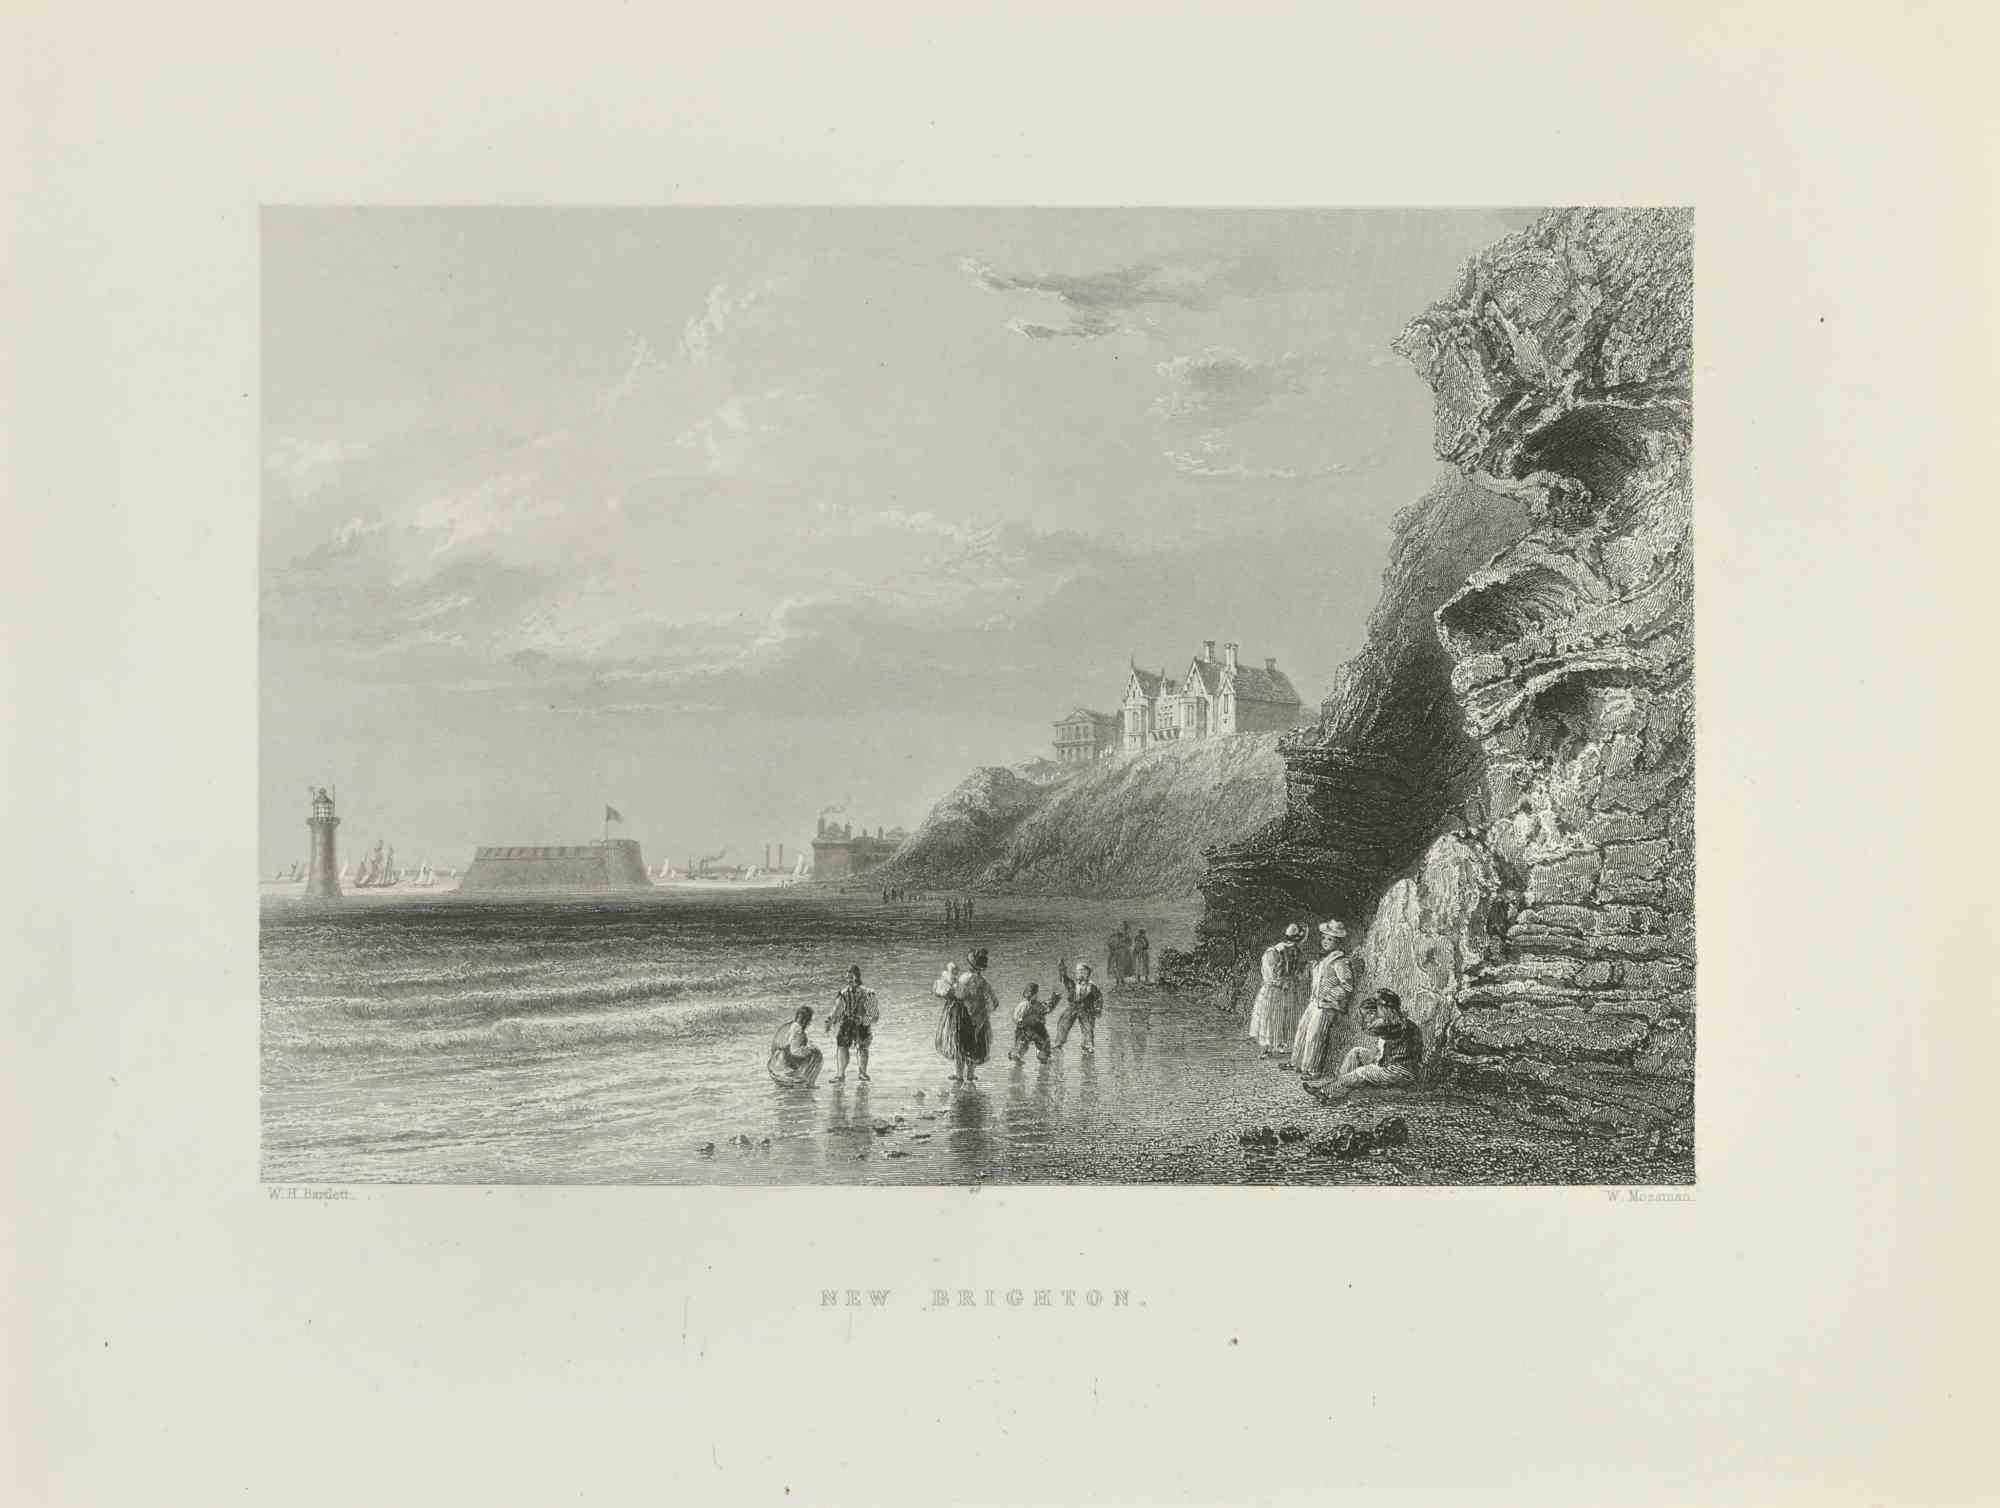 William Henry Bartlett  Figurative Print - New Brighton - Etching By W.H. Bartlett - 1845